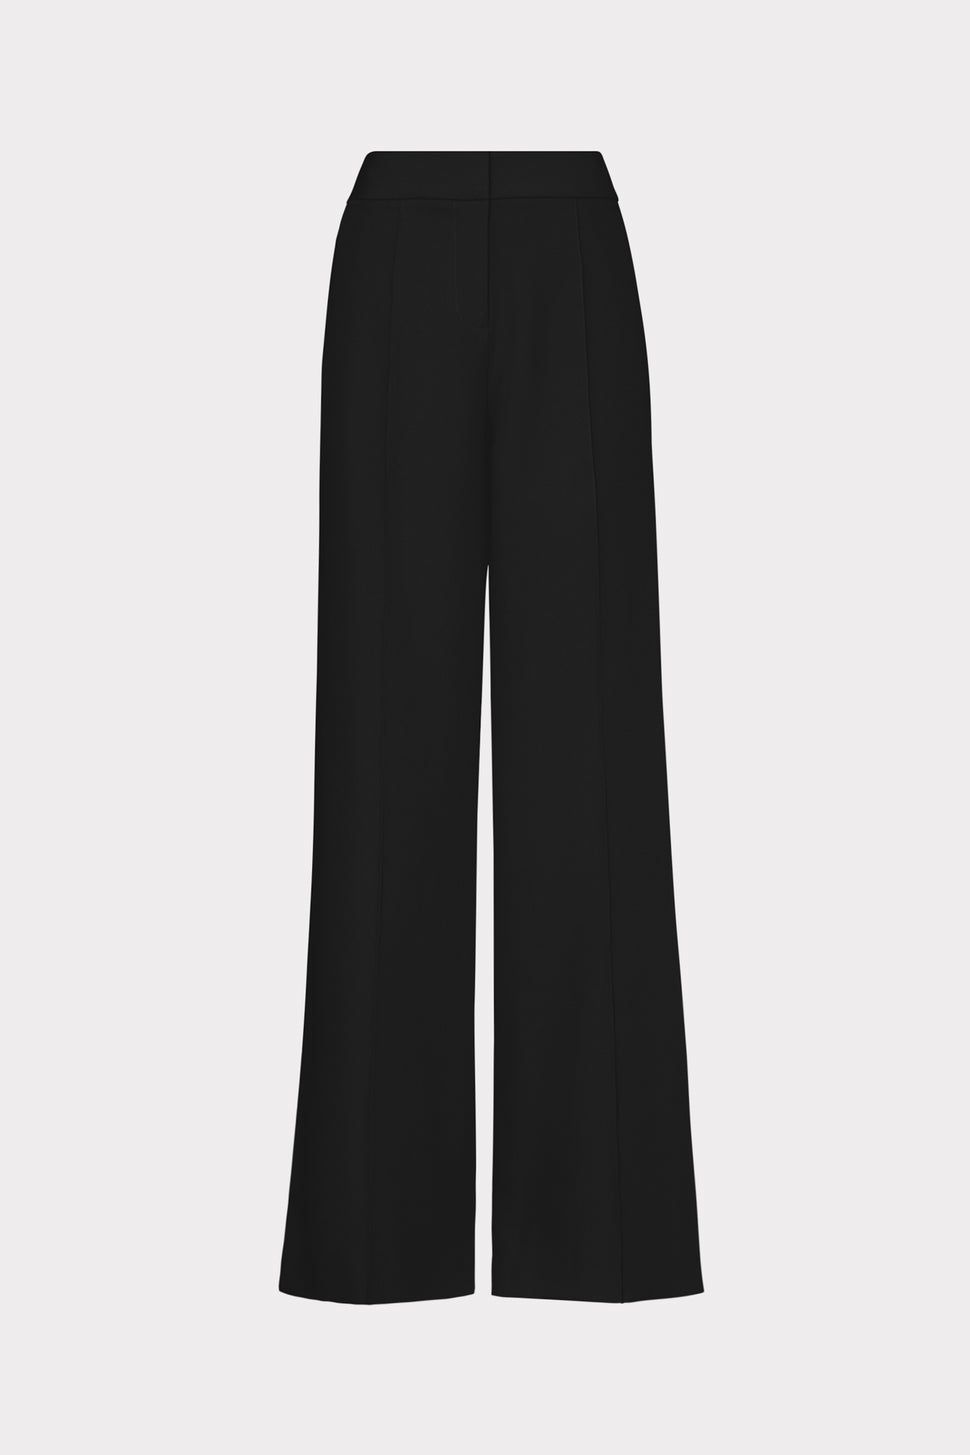 Black Silk Crepe Pleat Detail Pant - WOMEN Pants